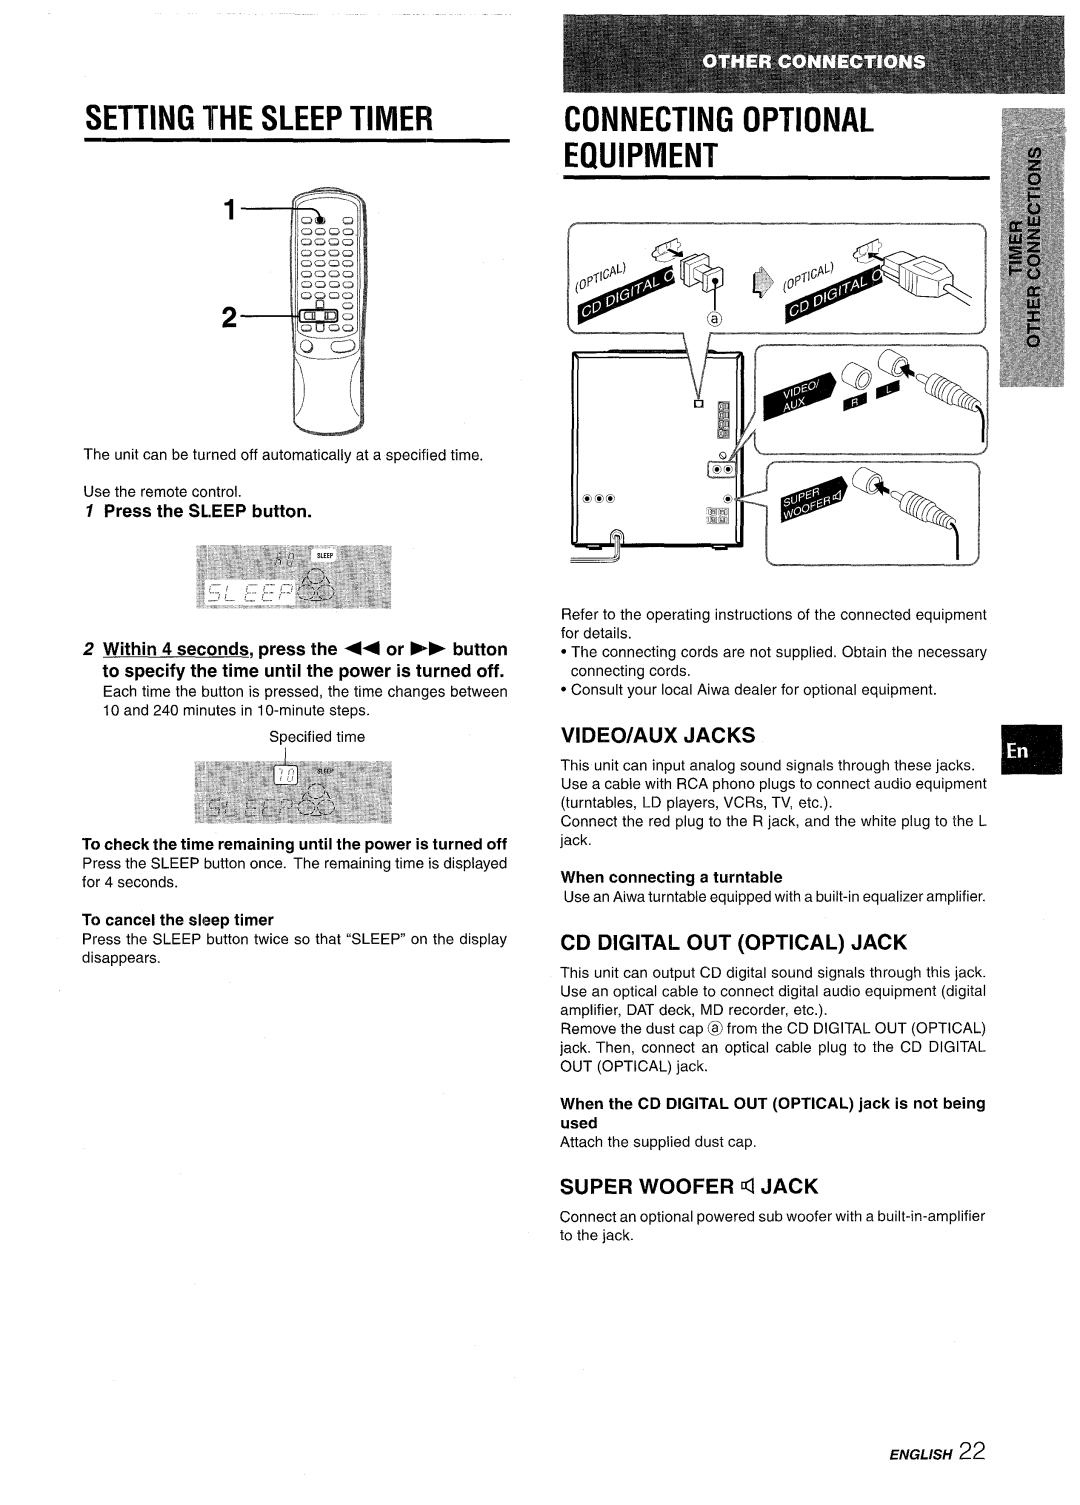 Aiwa NSX-AV800 manual Setting The Sleep Timer, Video/Aux Jacks, Cd Digital Out Optical Jack, Super Woofer ~ Jack 